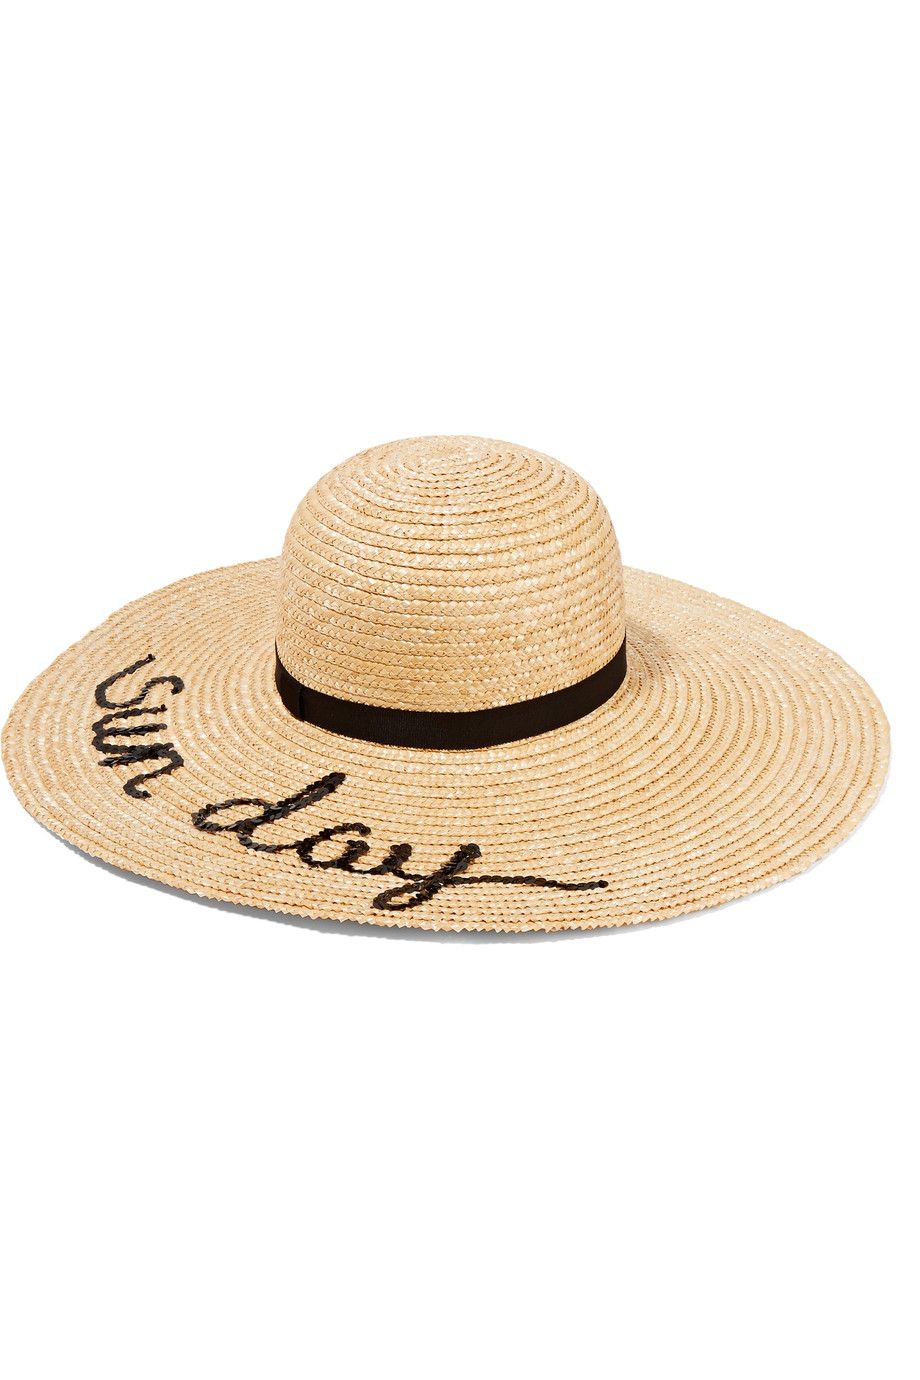 Hat, Fashion accessory, Headgear, Costume accessory, Tan, Beige, Costume hat, Sun hat, Circle, Fedora, 